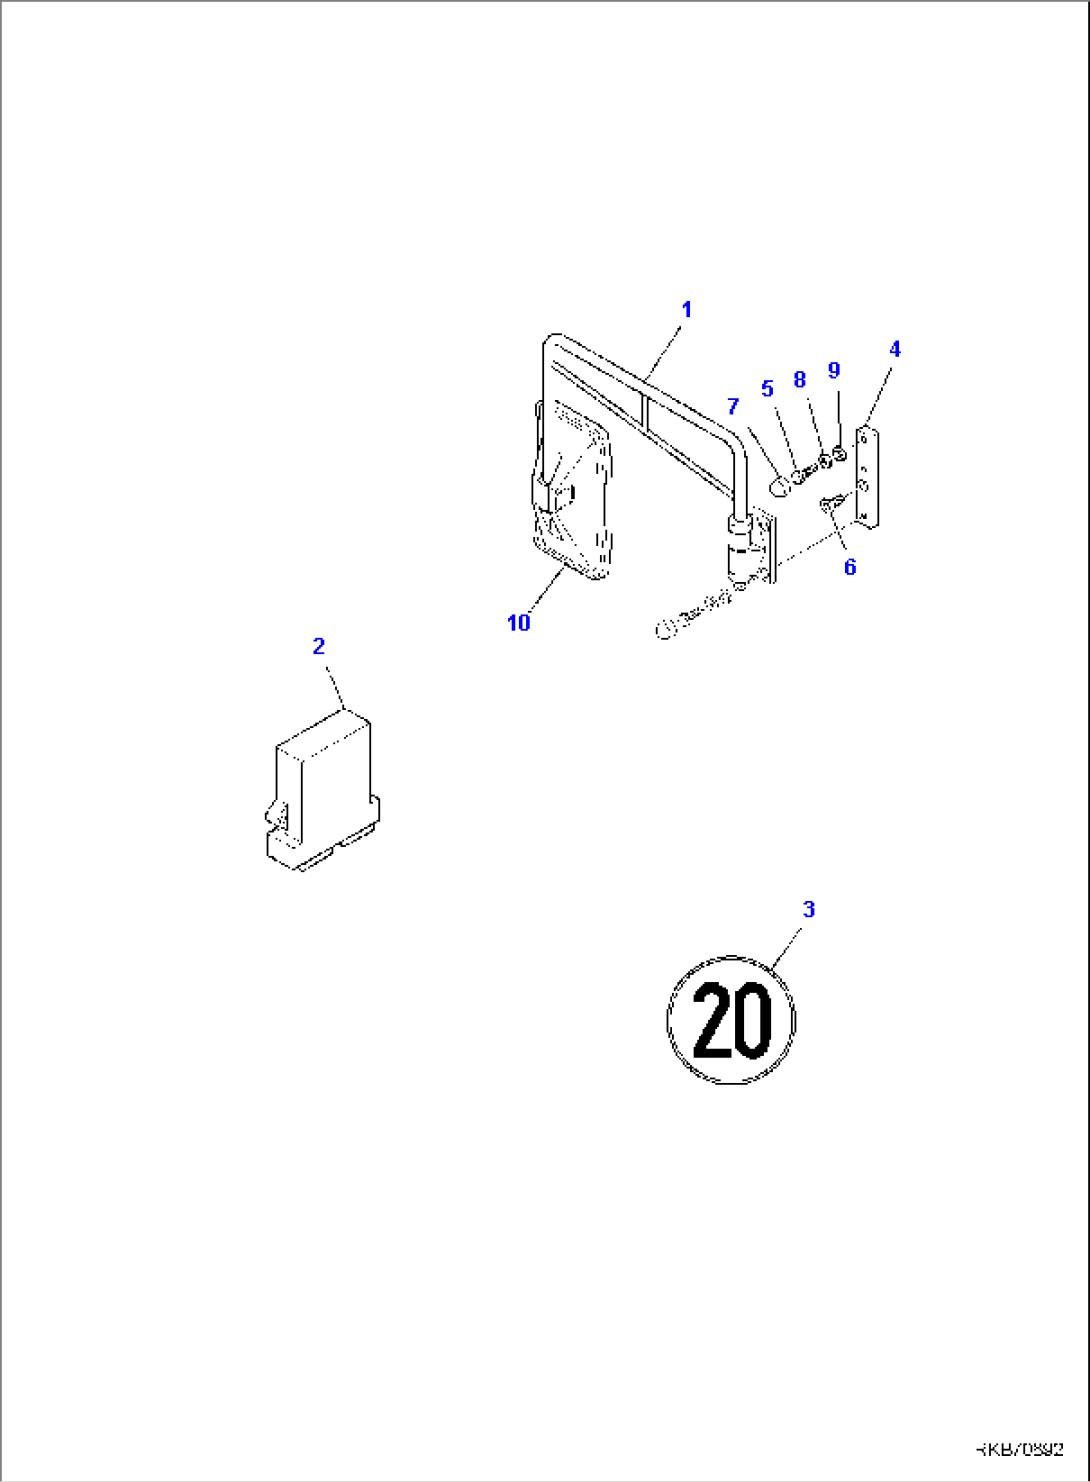 EQUIPMENT (TUV) (20 km/h) (2/2)